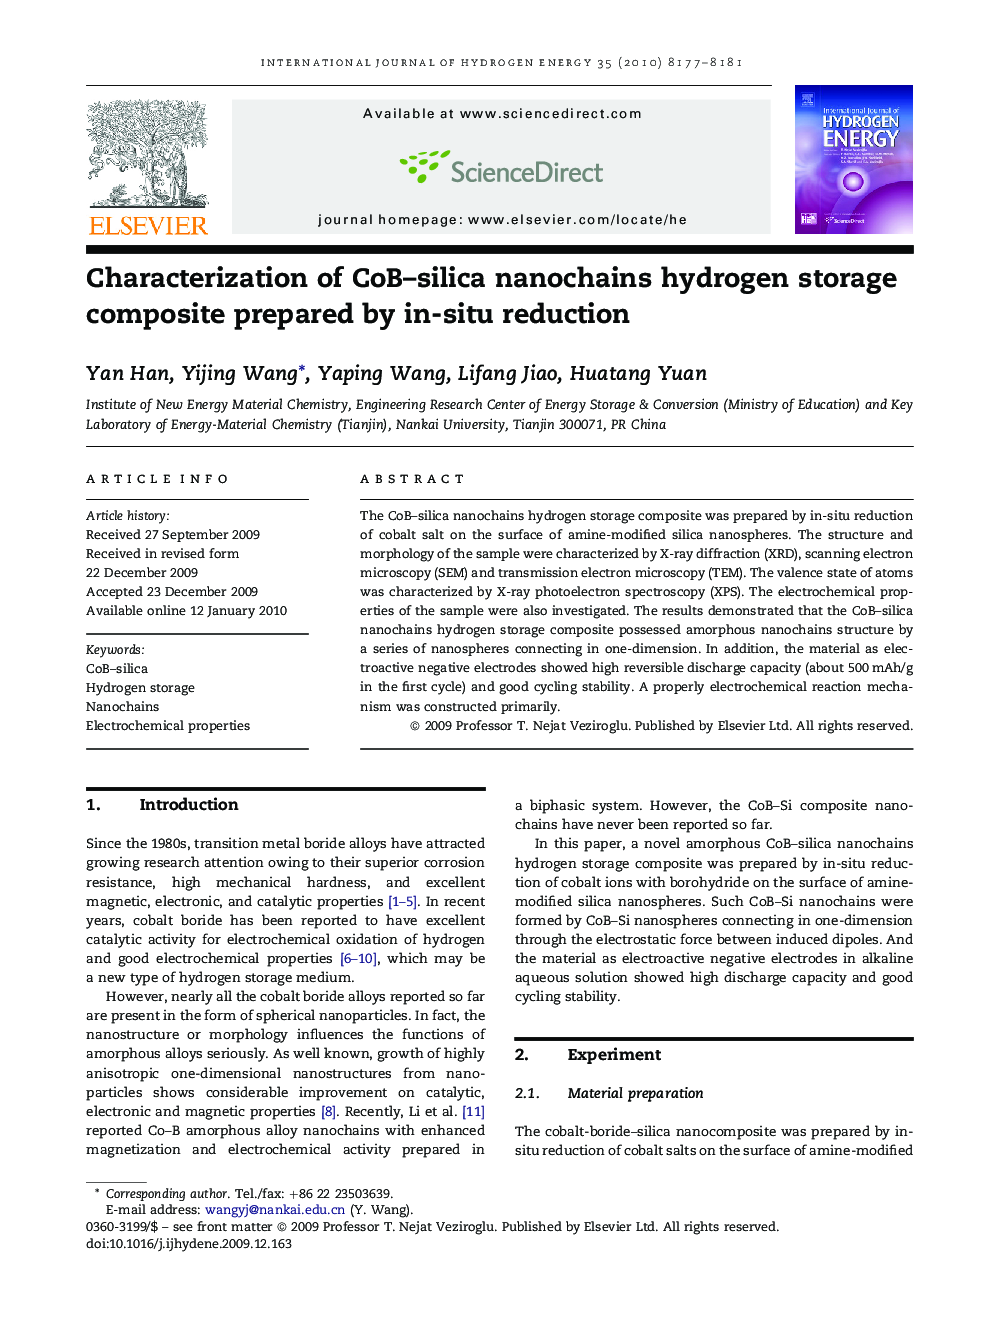 Characterization of CoB–silica nanochains hydrogen storage composite prepared by in-situ reduction